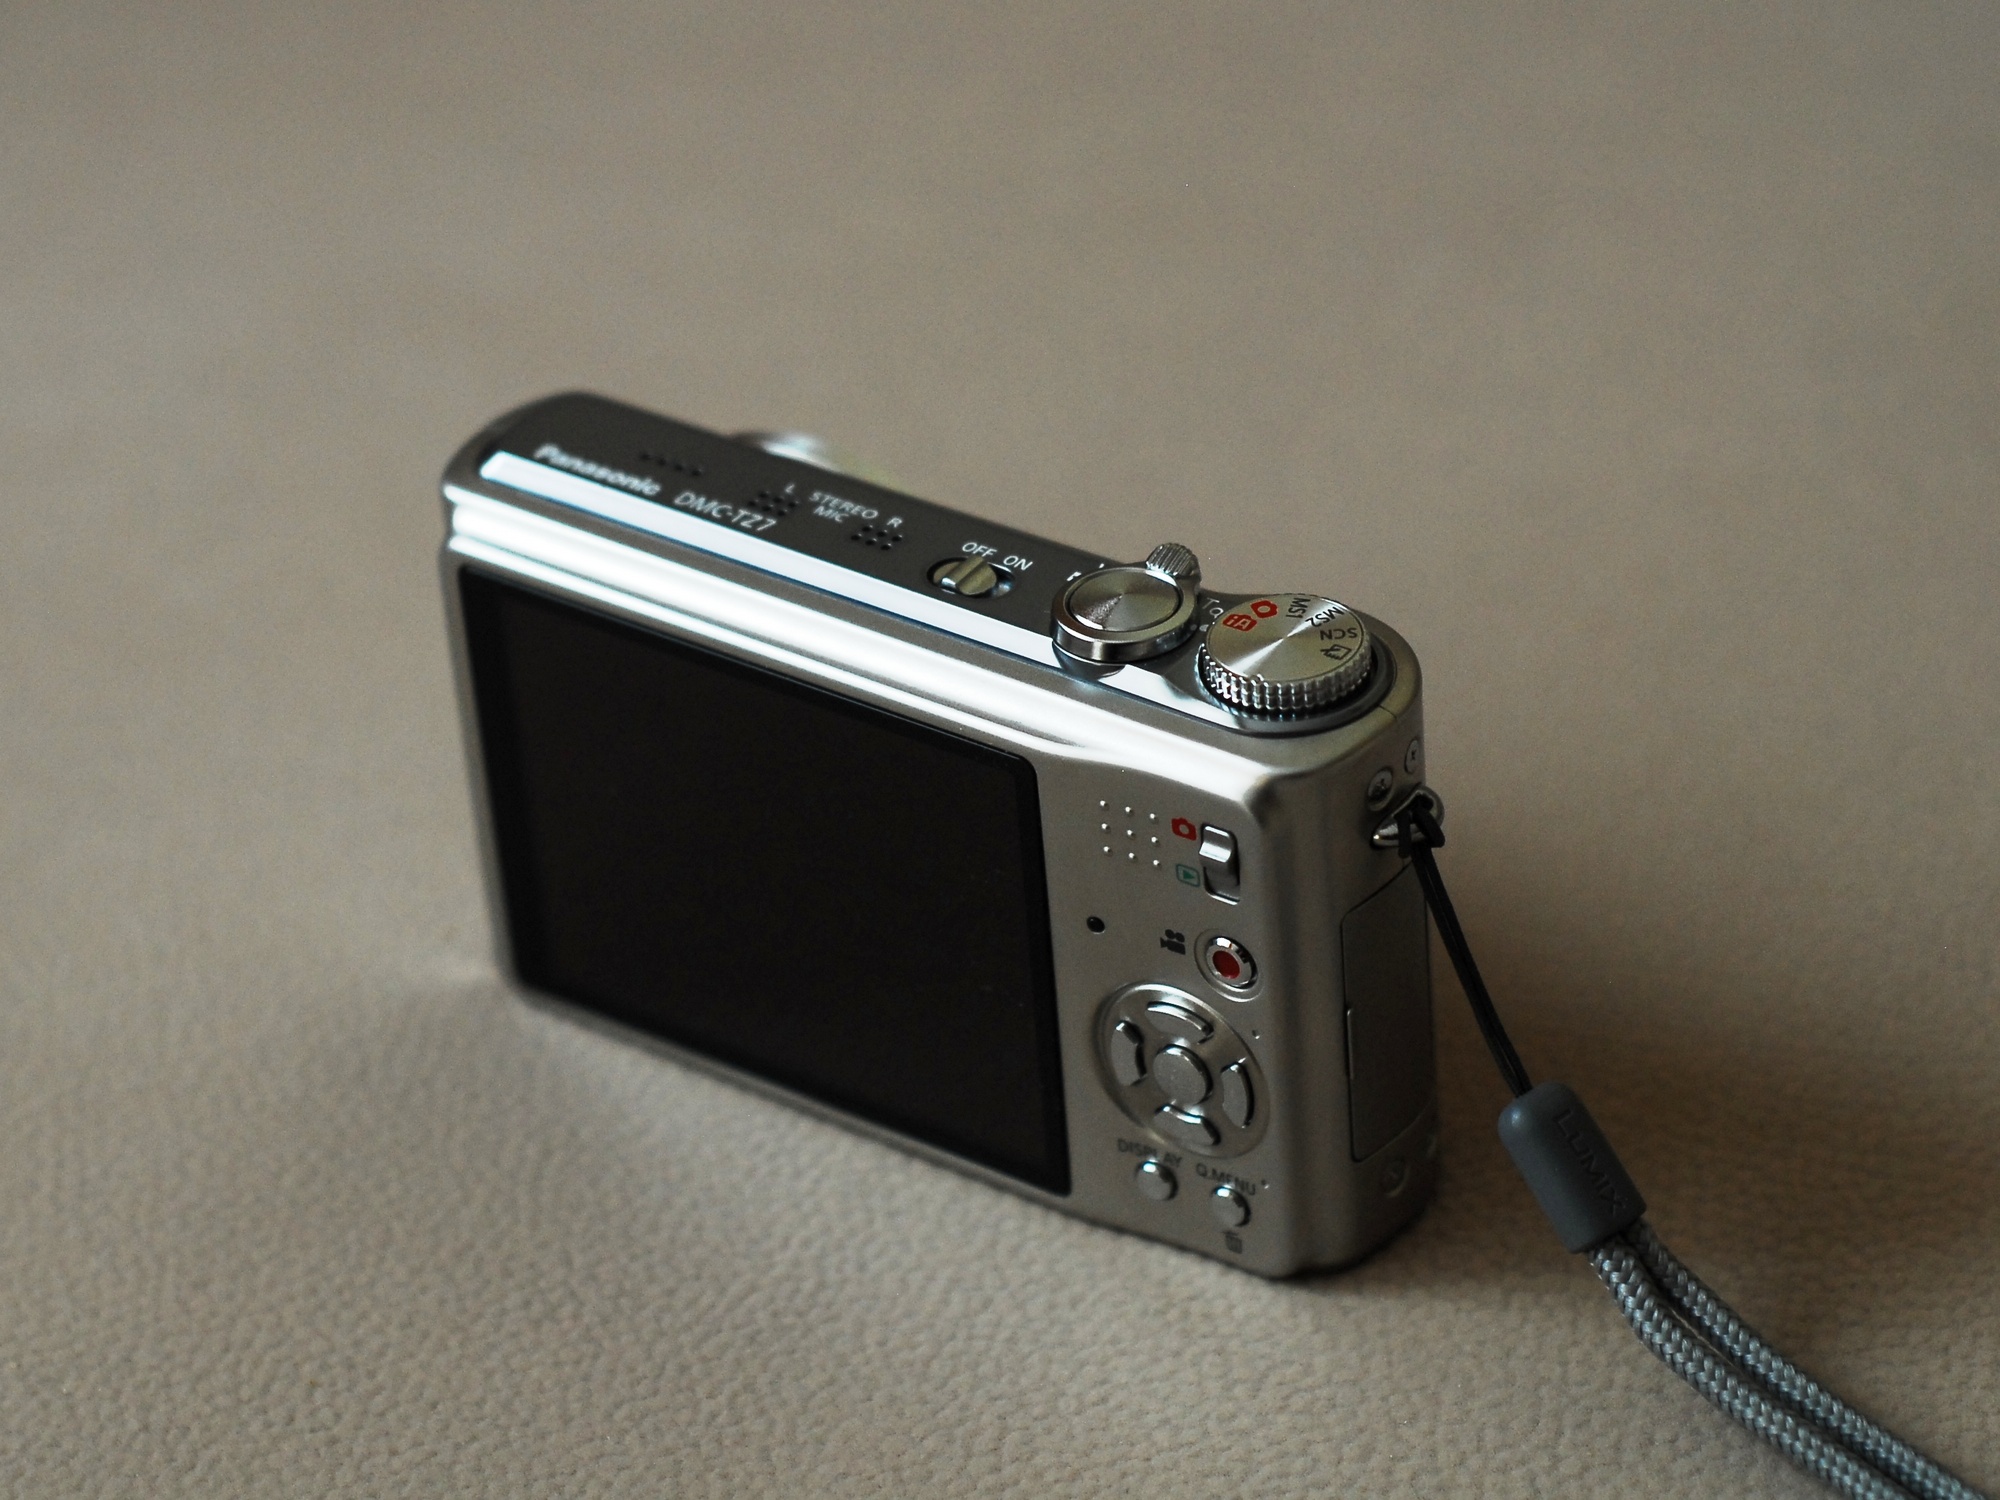 Ontslag nemen bod bagage File:Panasonic Lumix DMC-TZ7 silver (back).jpg - Wikimedia Commons